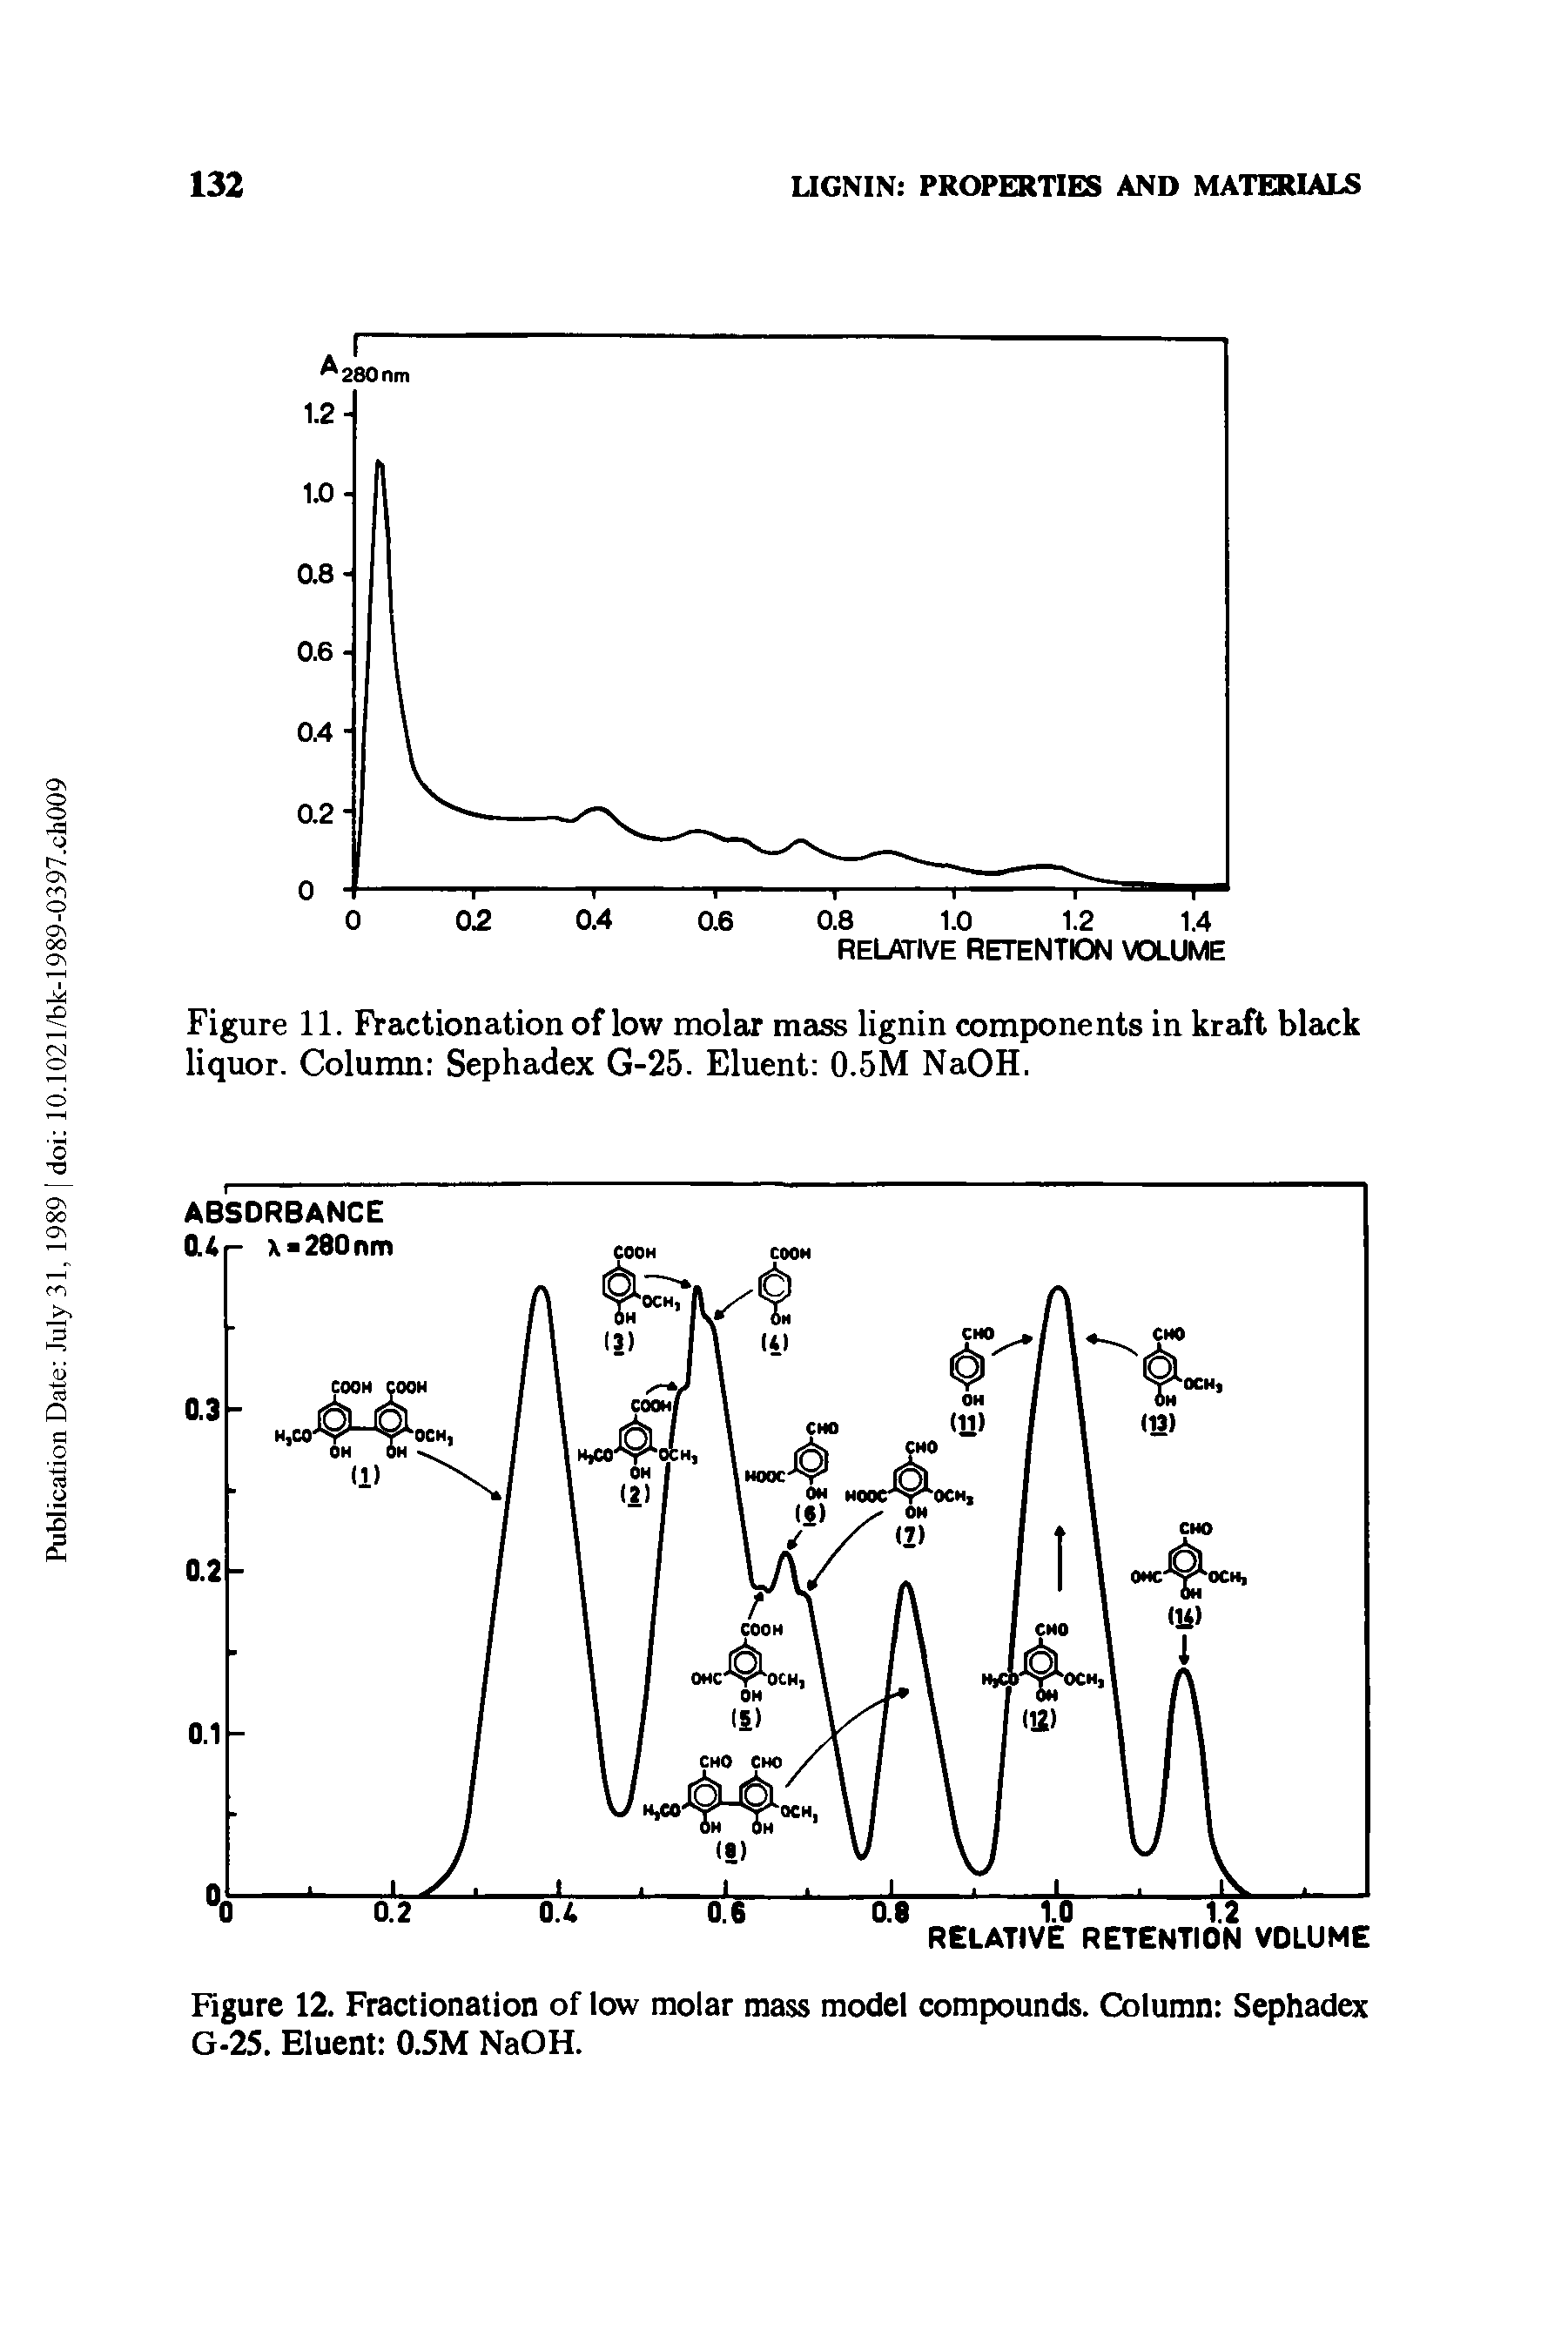 Figure 11. Fractionation of low molar mass lignin components in kraft black liquor. Column Sephadex G-25. Eluent 0.5M NaOH.